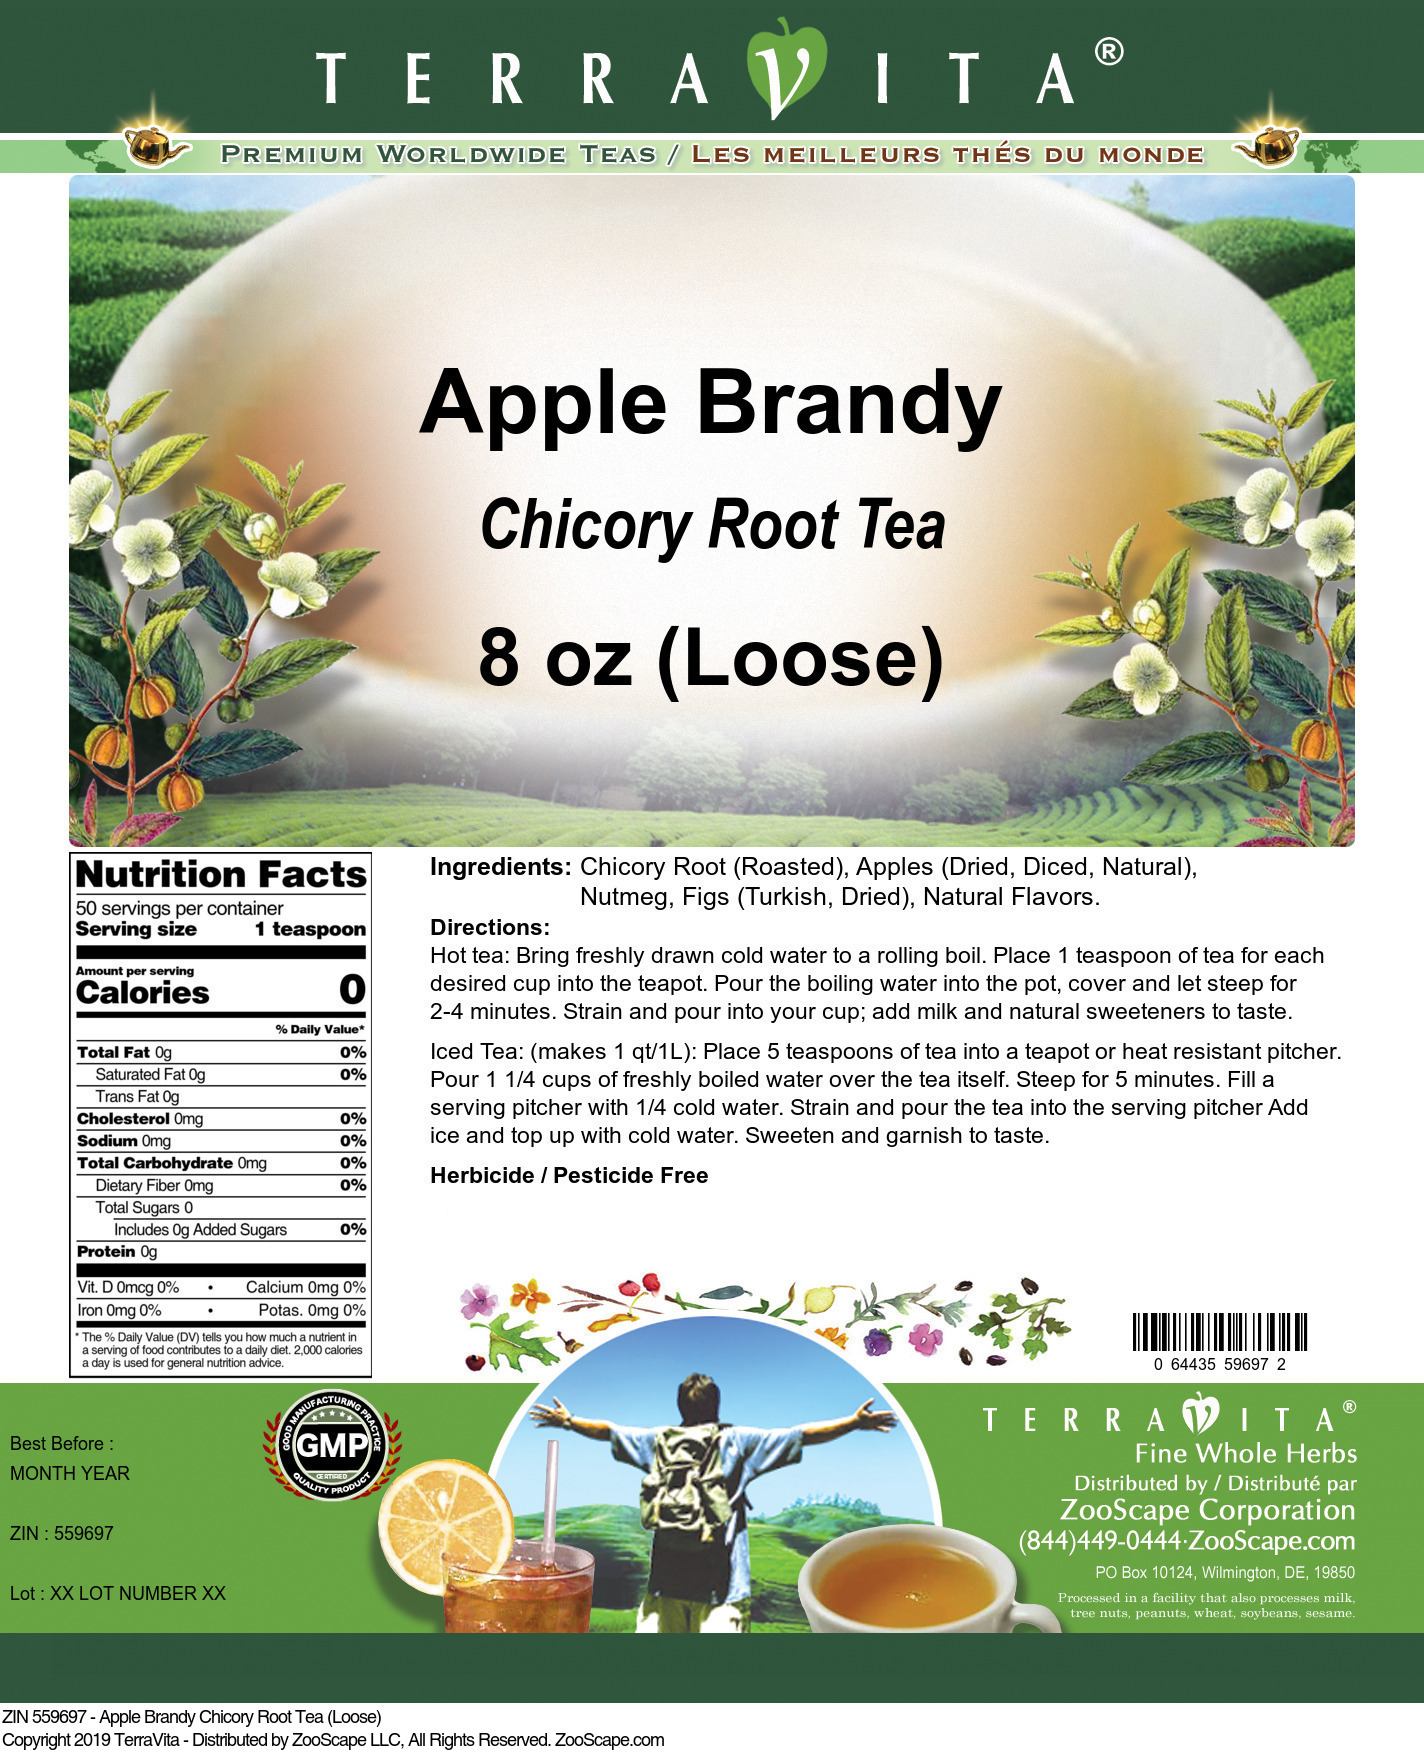 Apple Brandy Chicory Root Tea (Loose) - Label